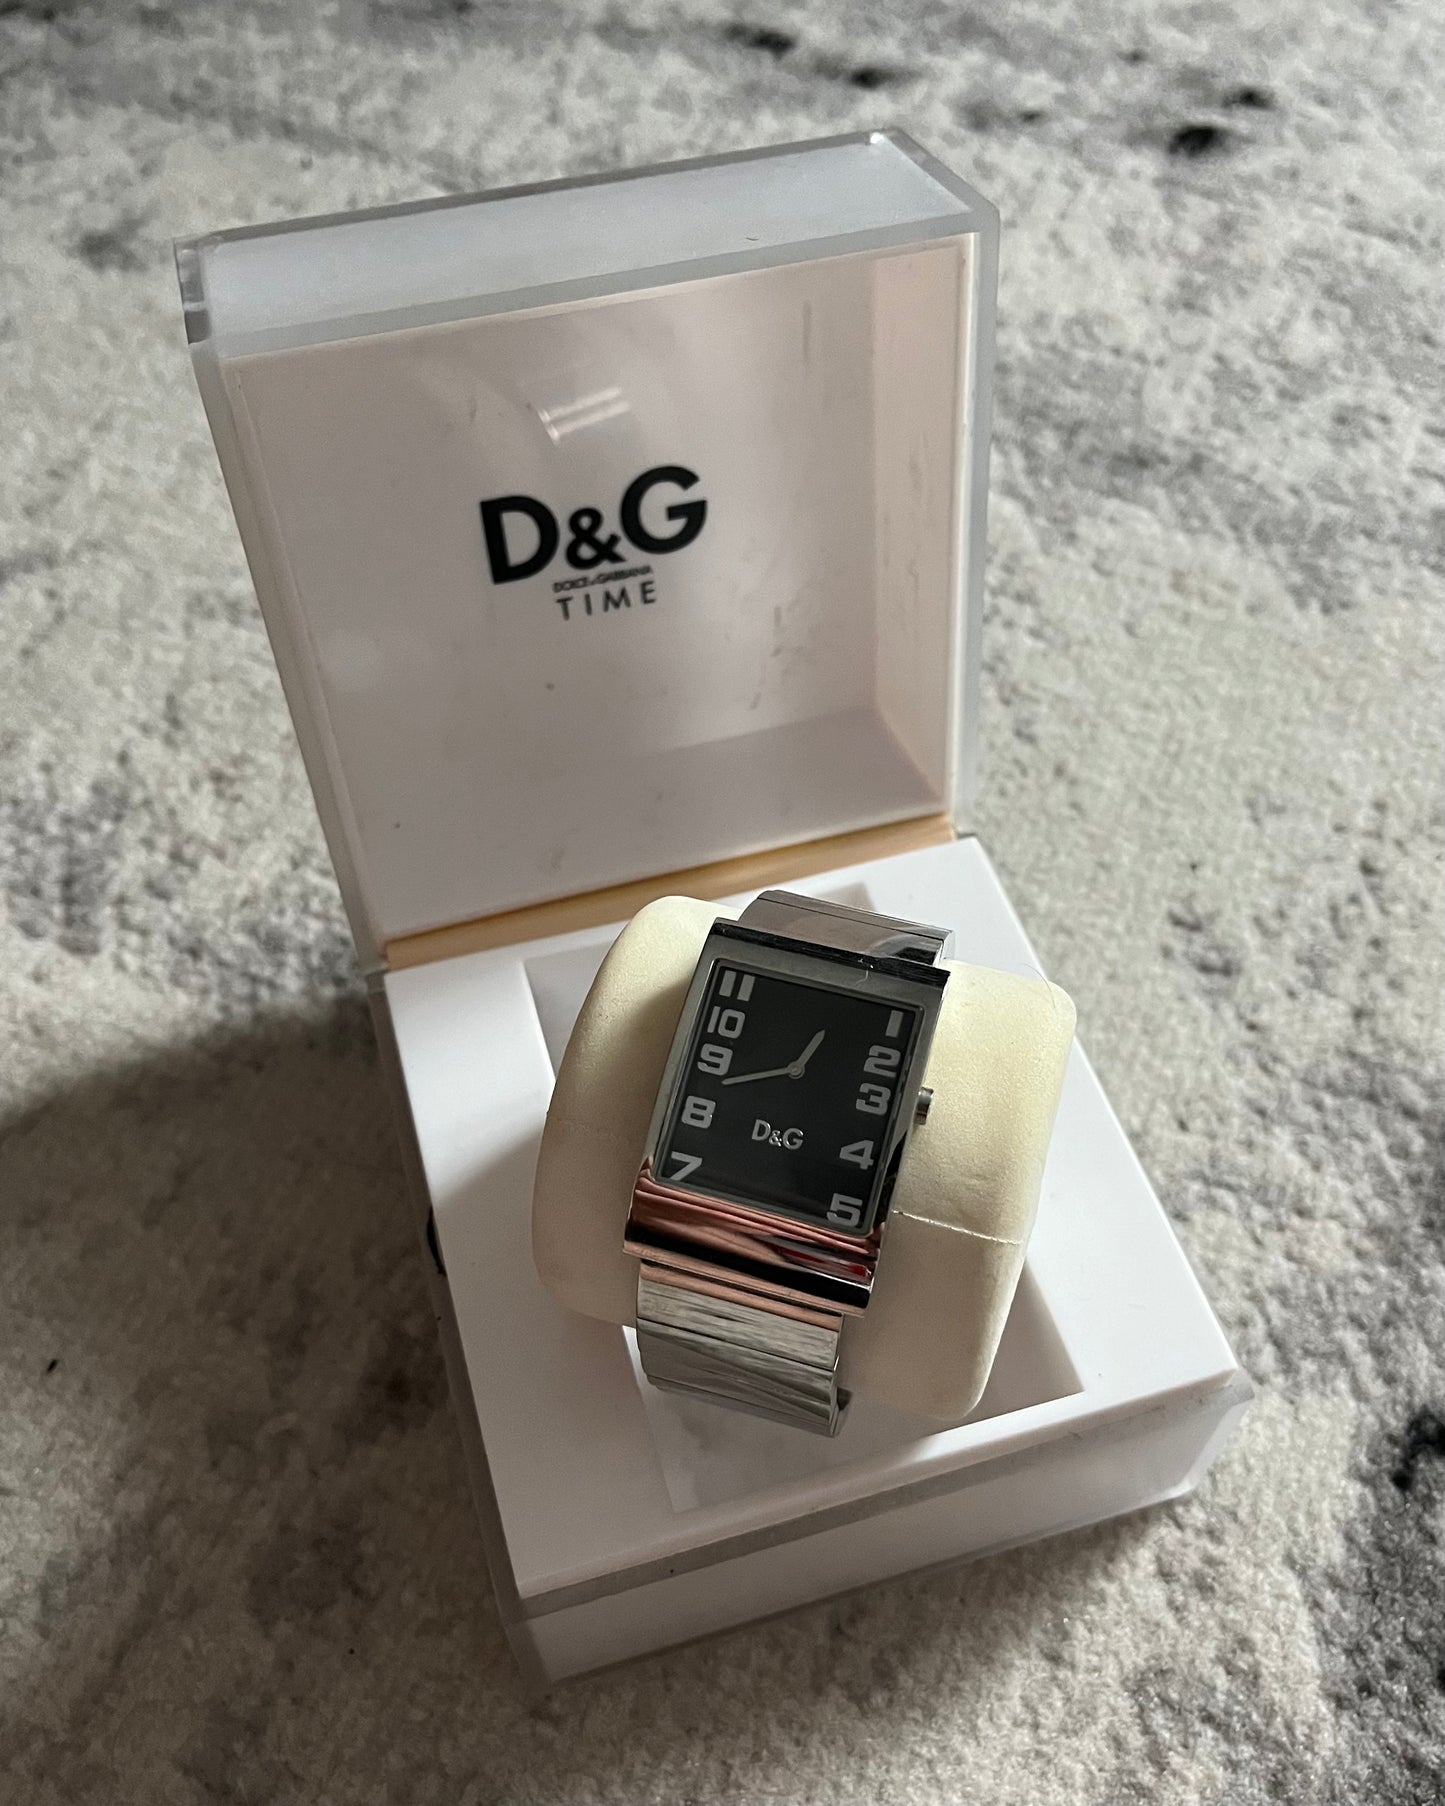 Dolce & Gabbana Archive Time Silver Steel Watch